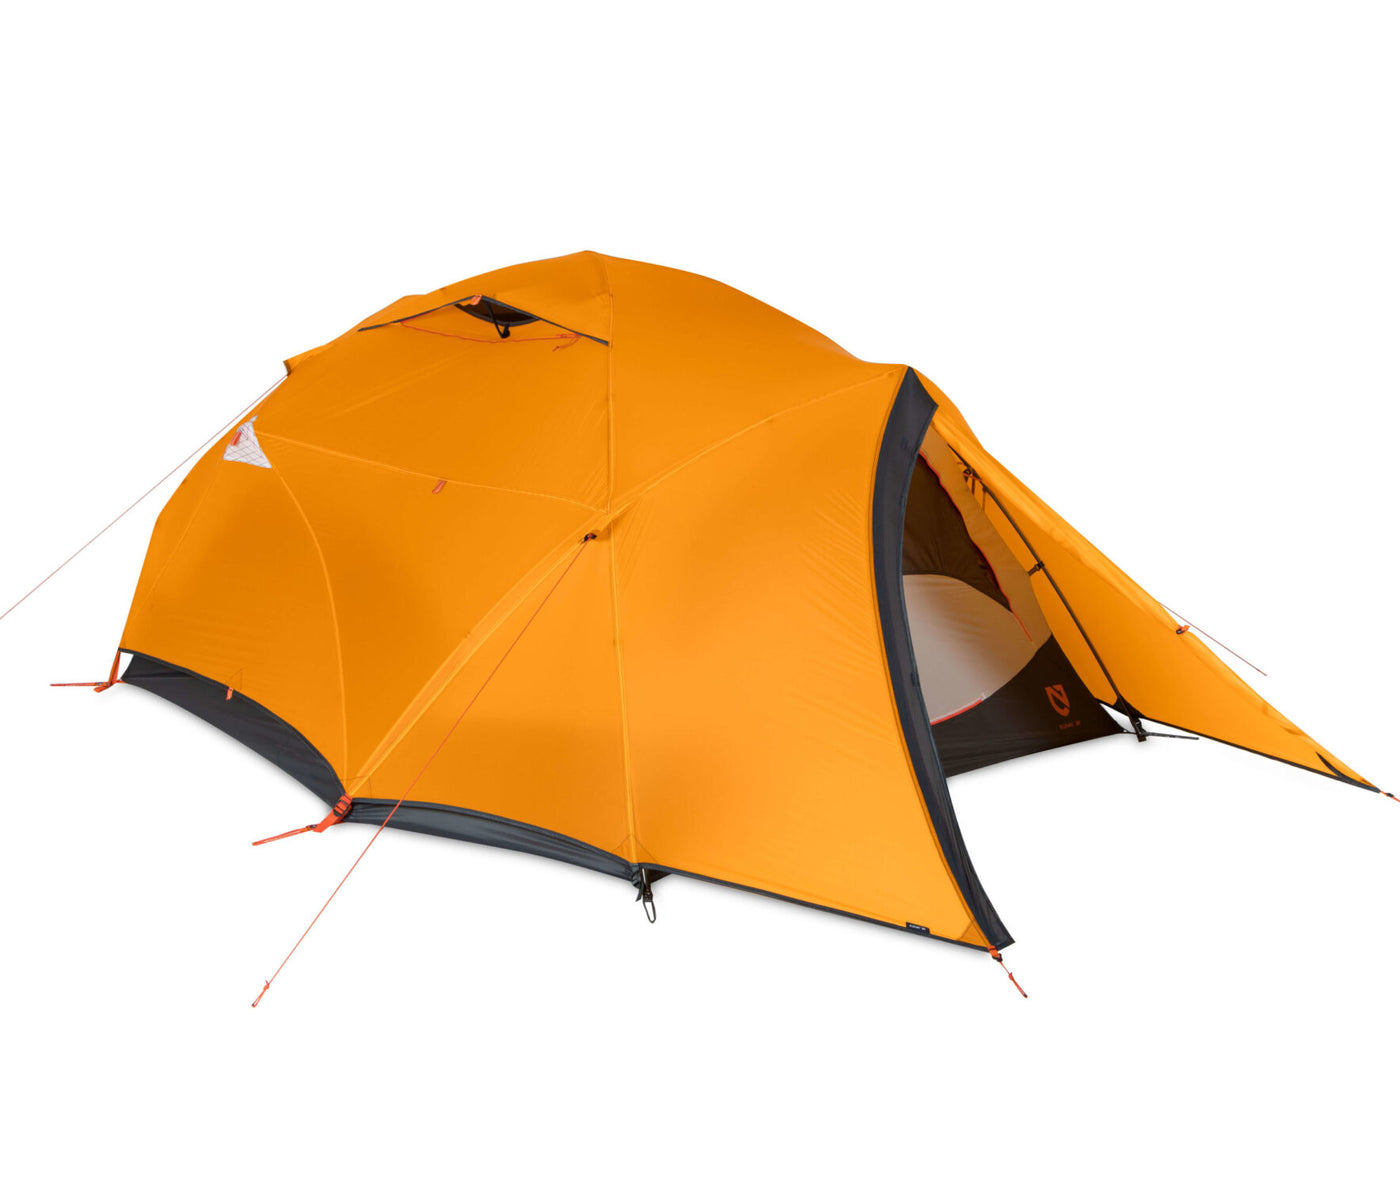 Kunai™ 3-4 Season Backpacking Tent